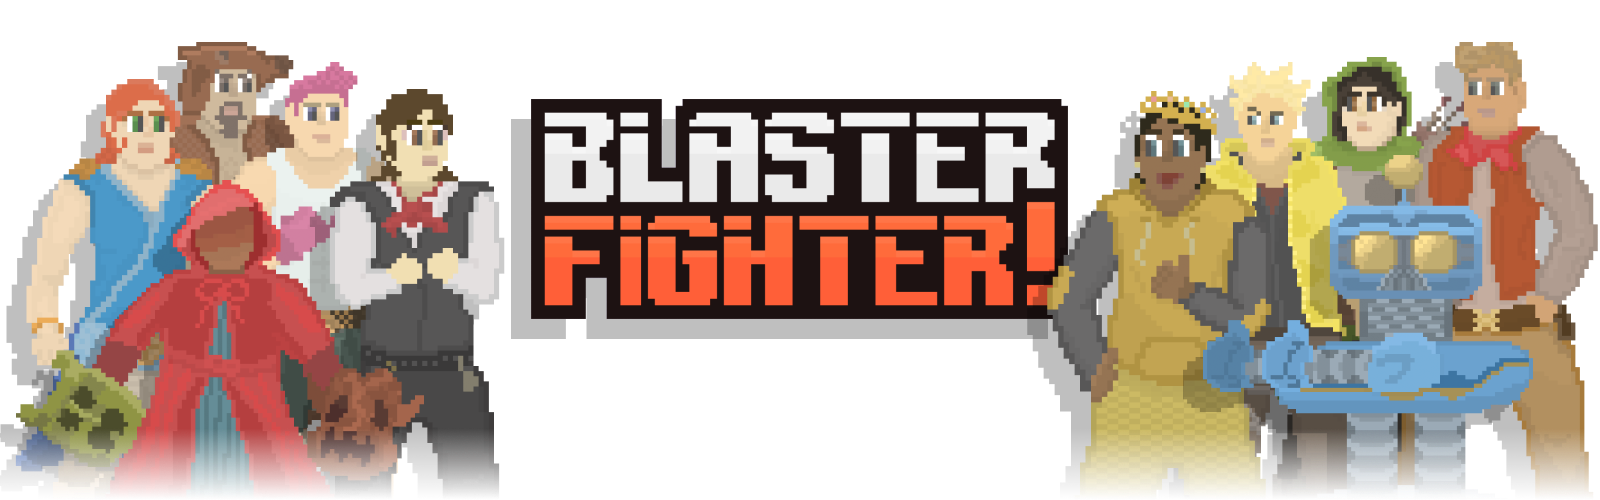 Blaster Fighter